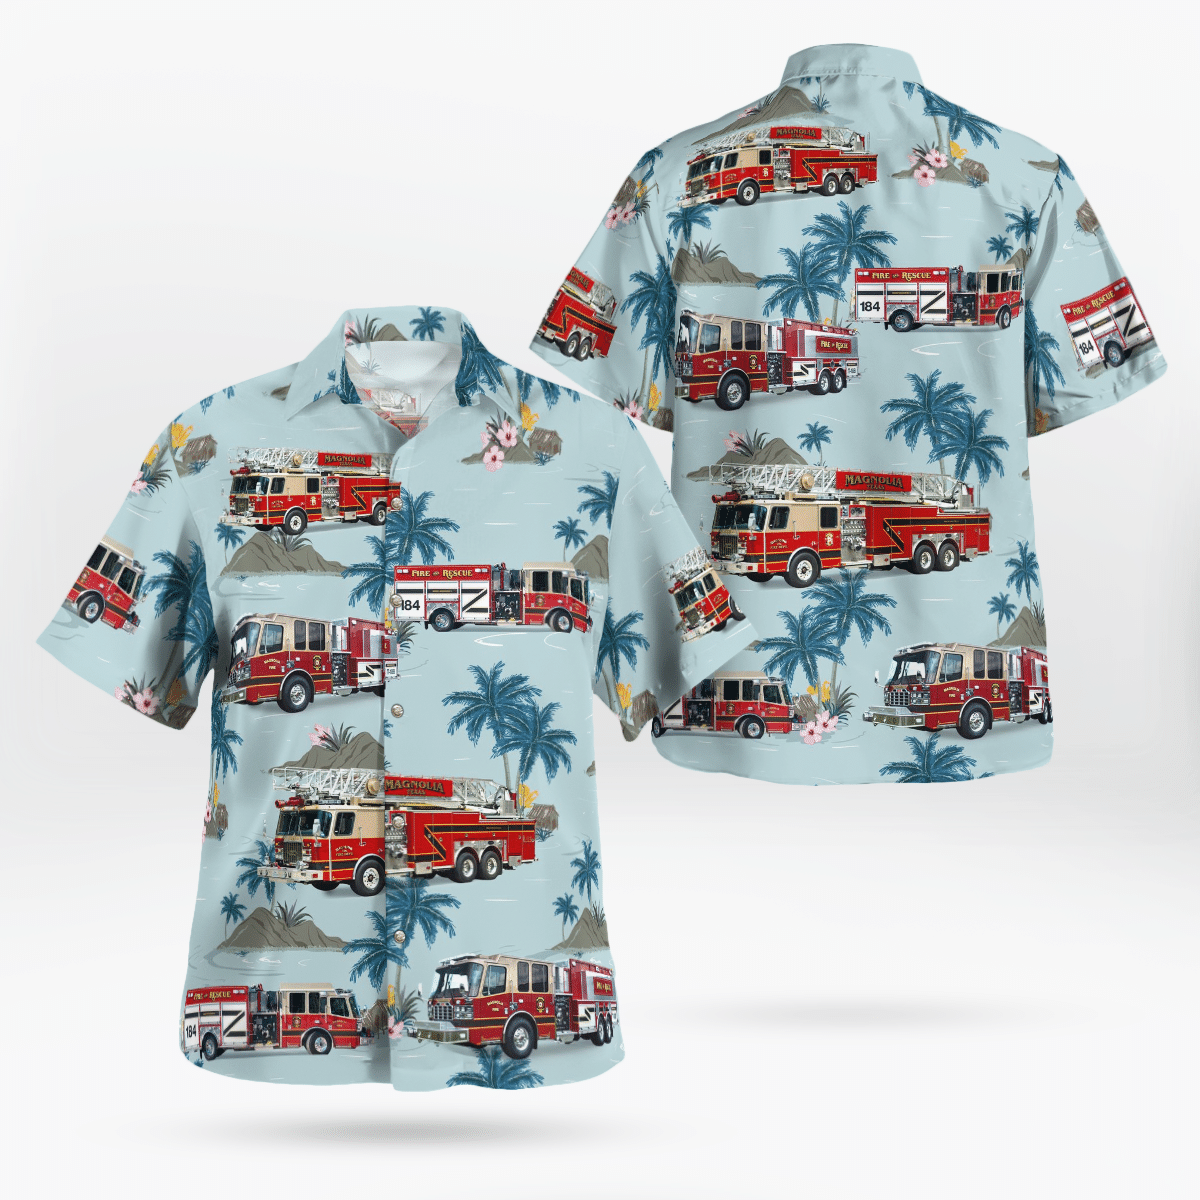 Why don't you order Hot Hawaiian Shirt today? 49